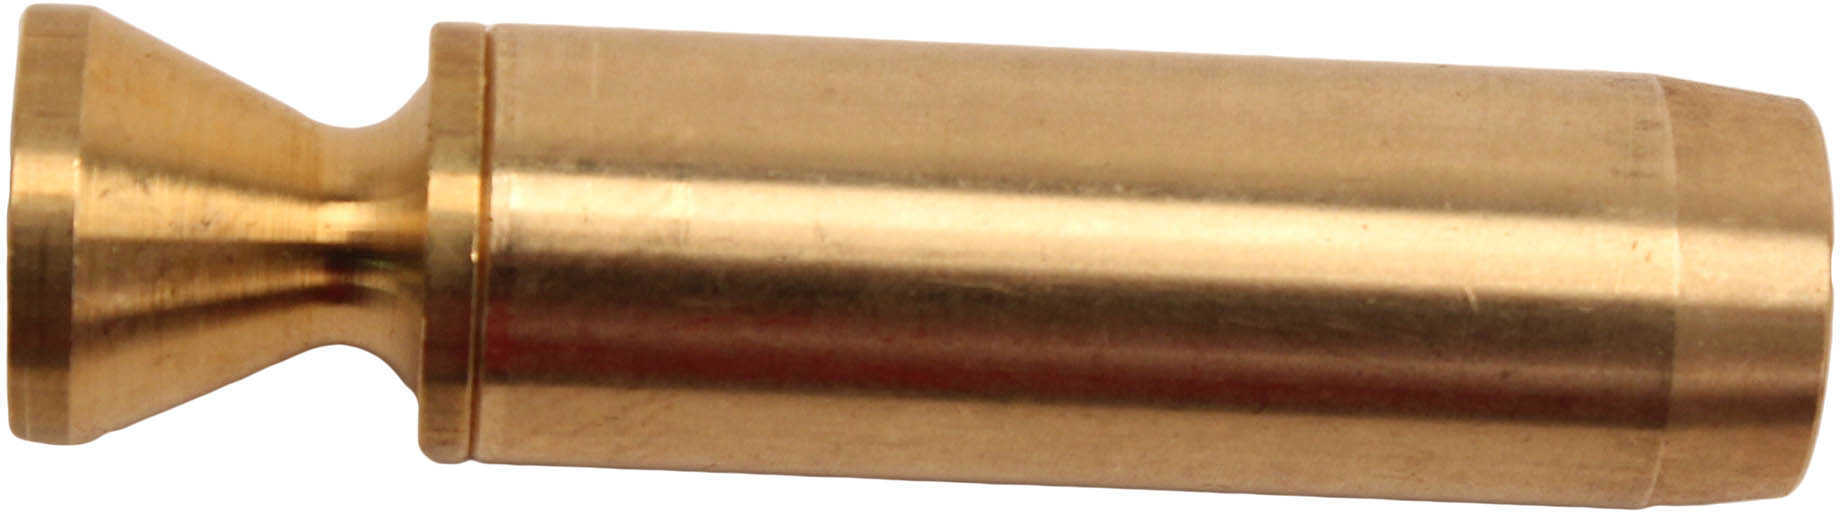 T/C Magnum Powder Measure 10-150 GRAINS Brass